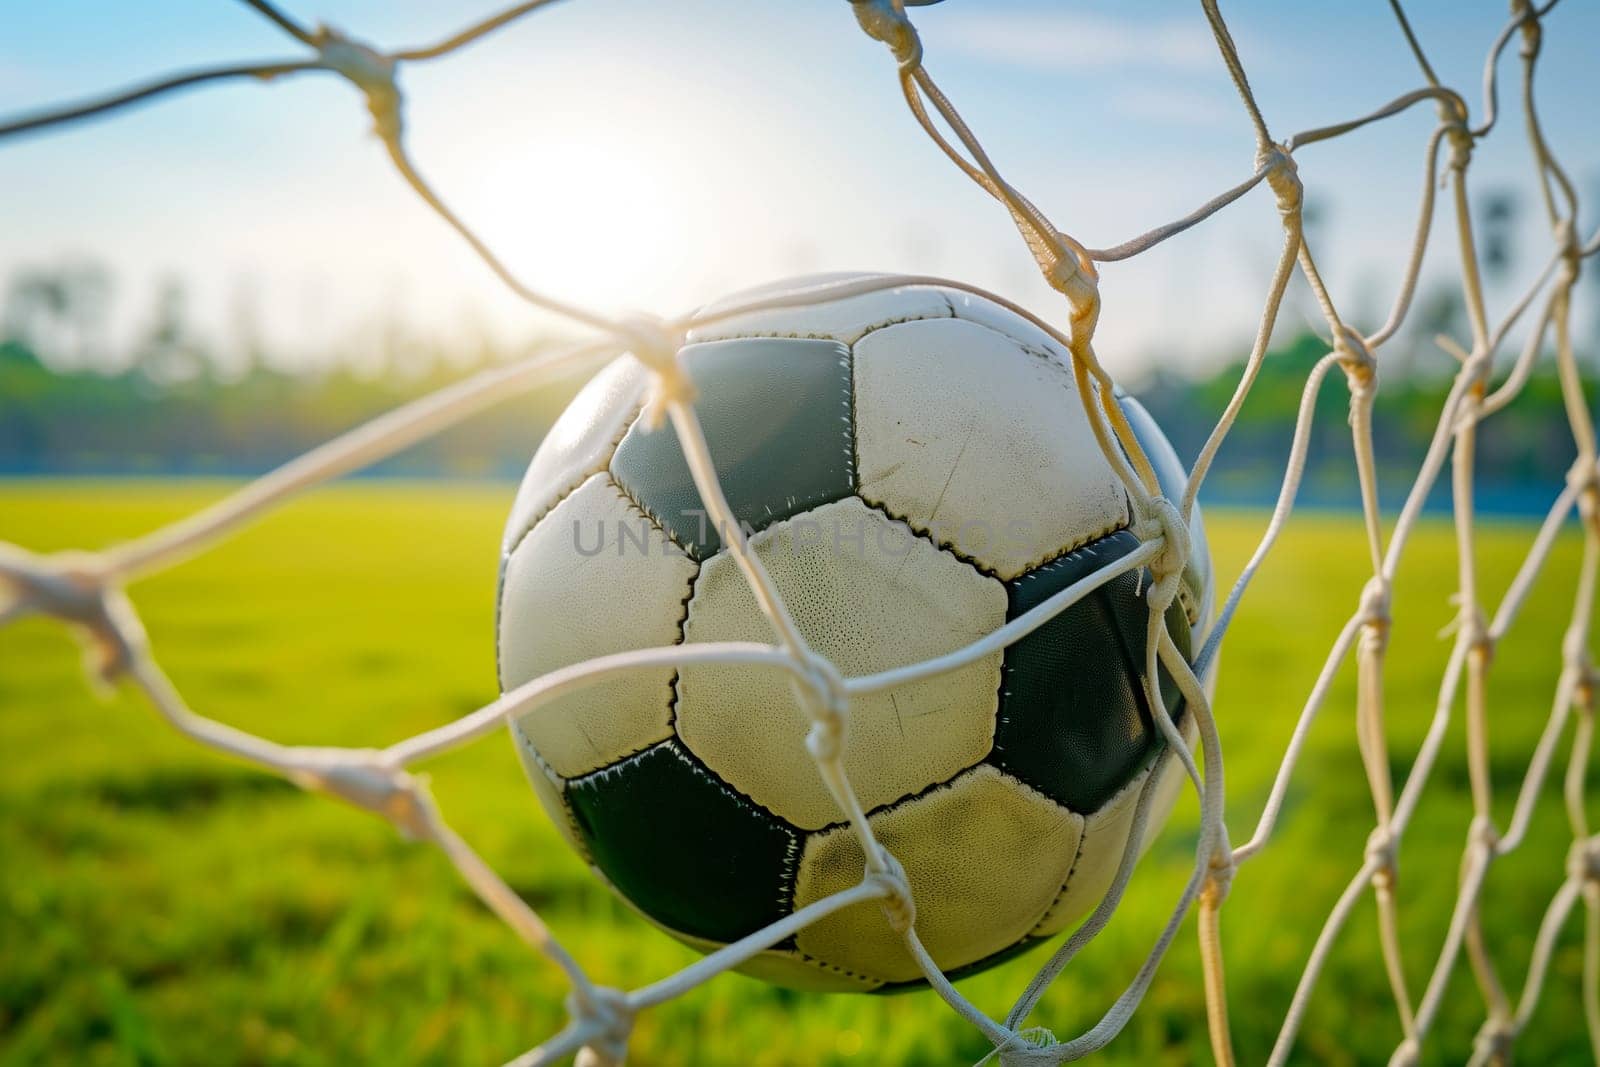 A soccer ball in a goal net by dimol